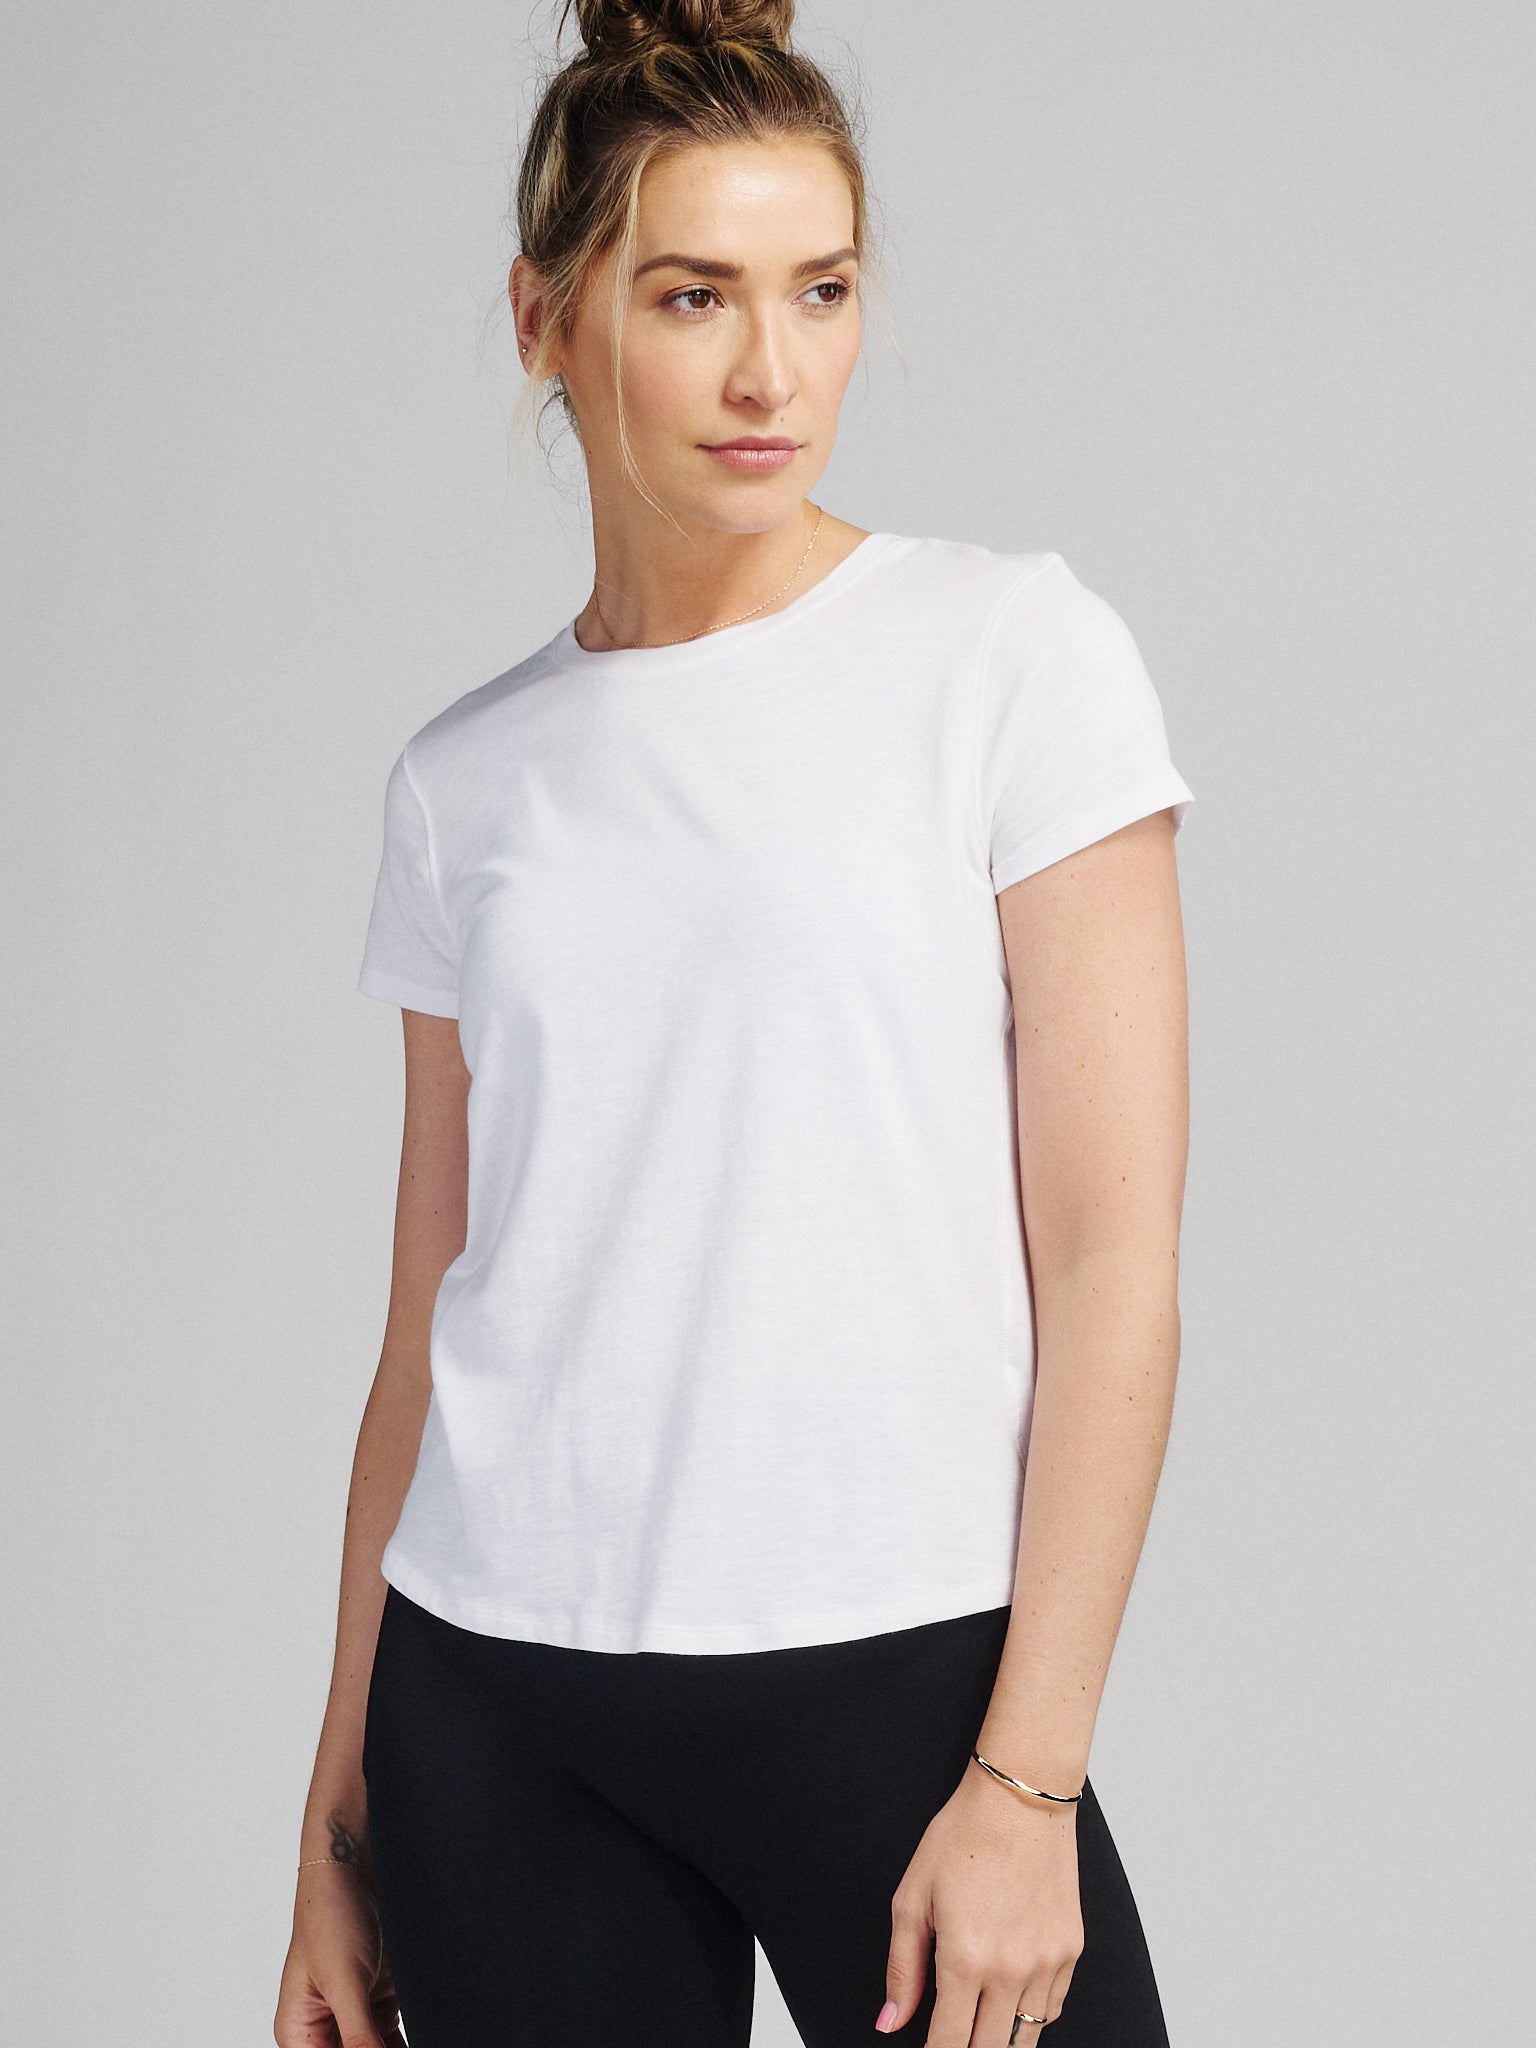 ALLways NOLA T-Shirt - tasc Performance (White)